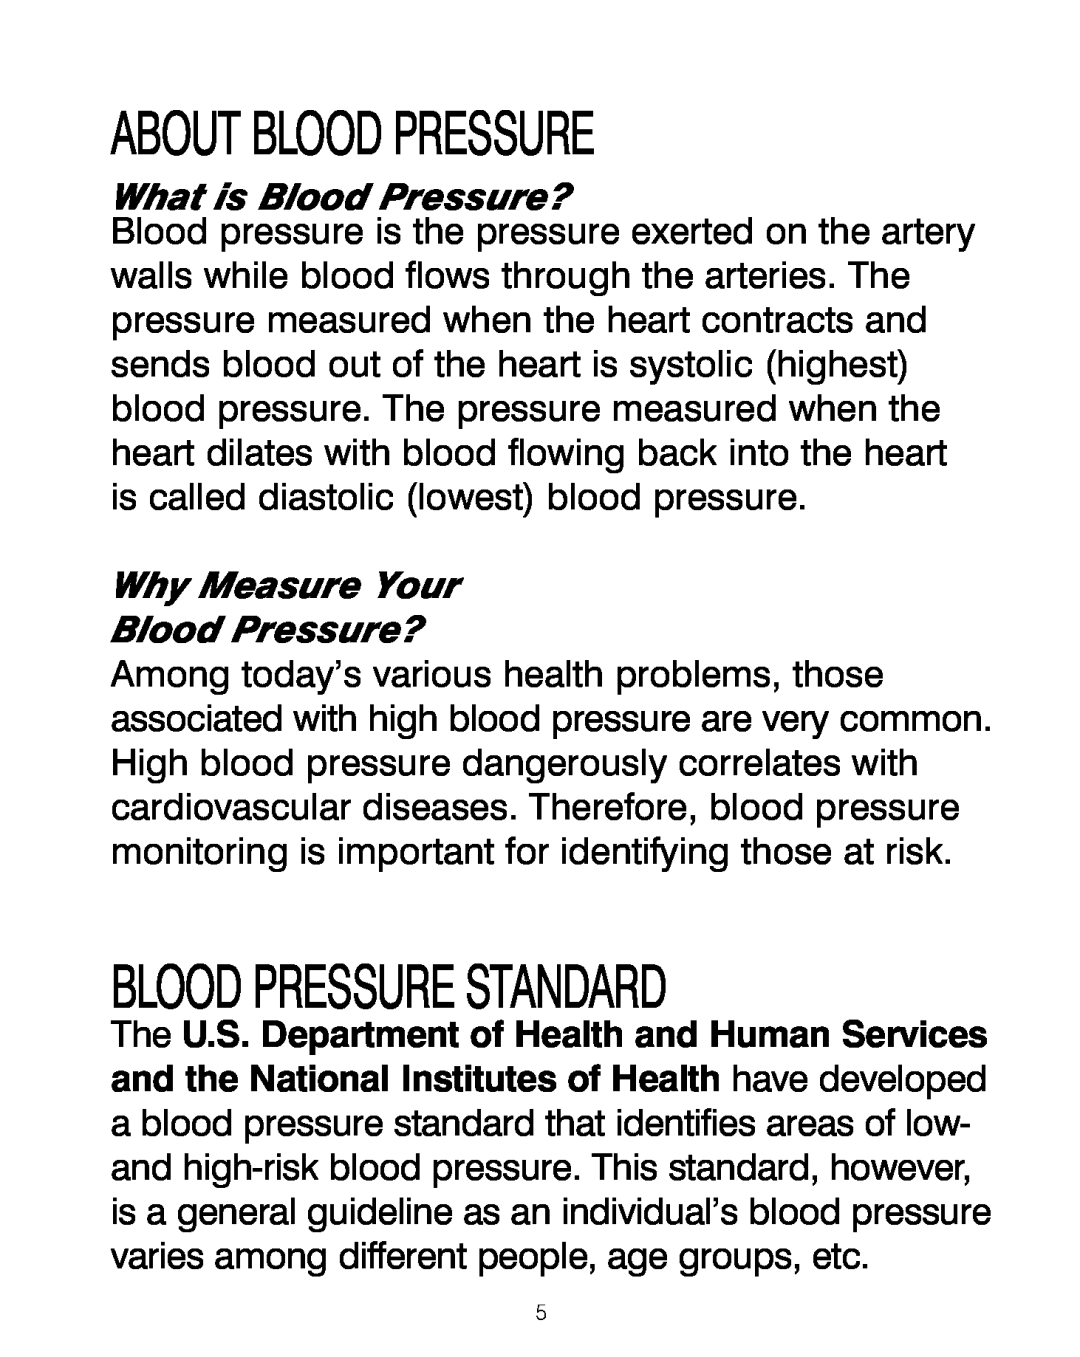 HoMedics BPA-200 About Blood Pressure, Blood Pressure Standard, What is Blood Pressure?, Why Measure Your Blood Pressure? 